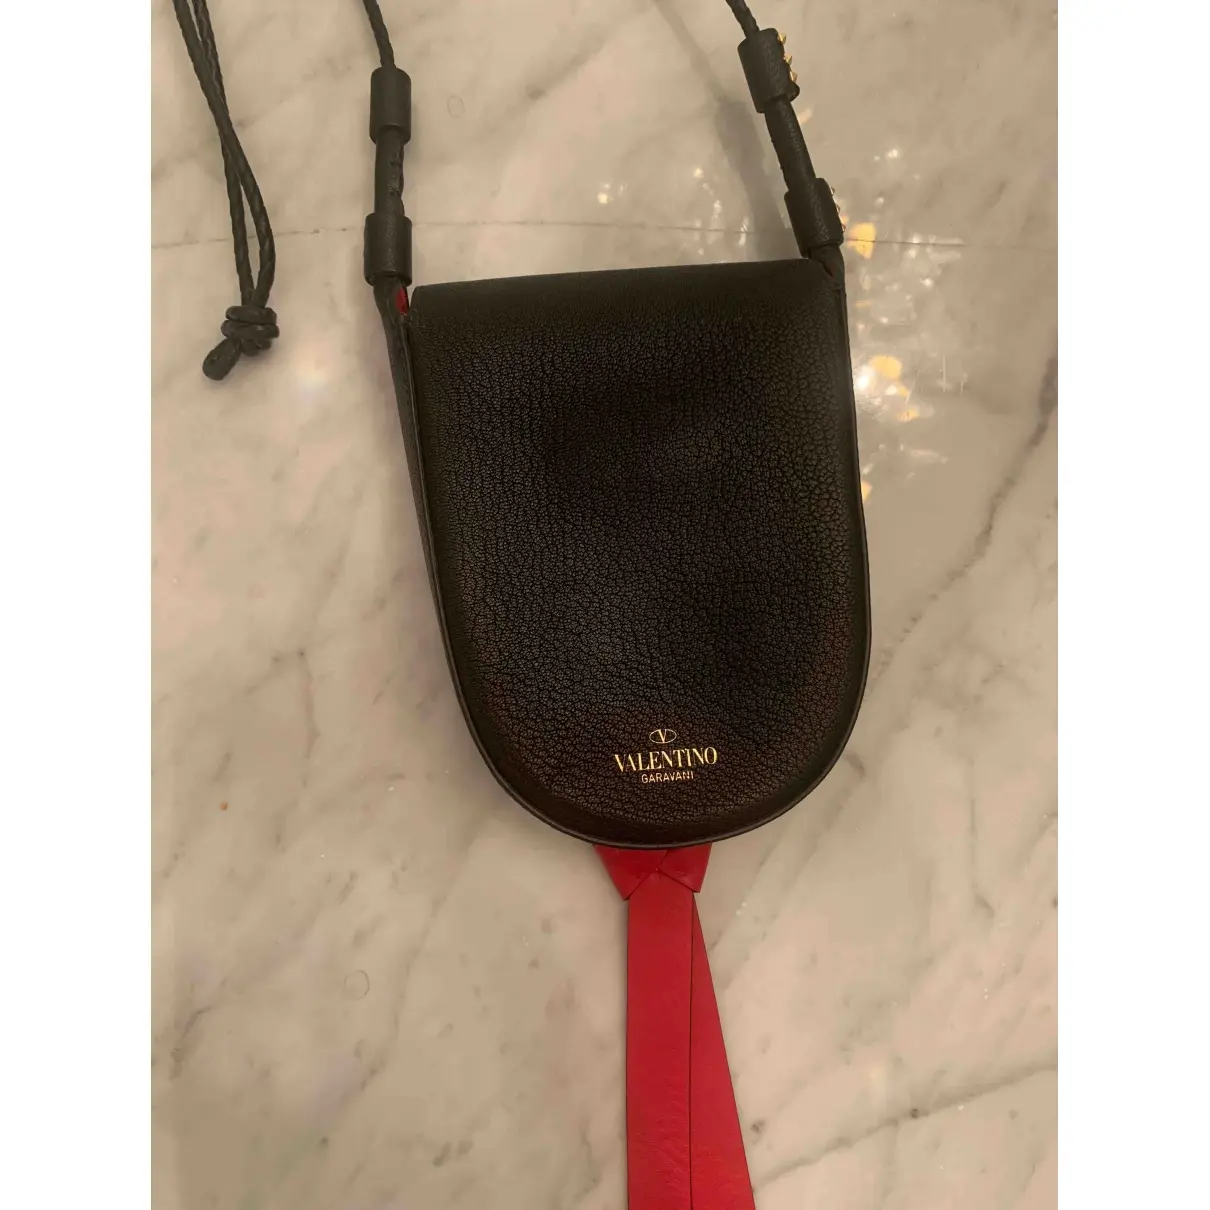 Valentino Garavani Leather clutch bag for sale